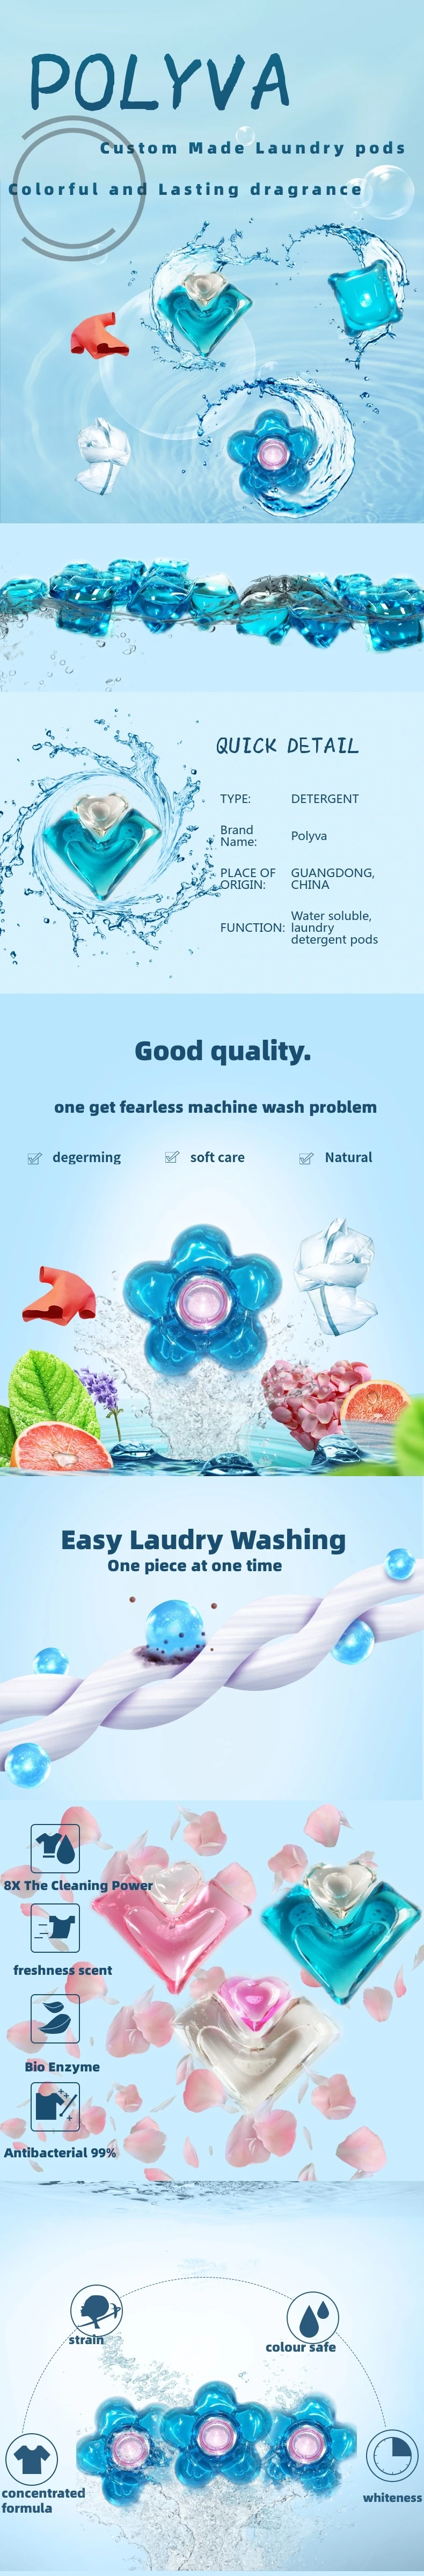 Polyva10g-30g OEM washing detergent capsules liquid laundry pods detergent Natural detergent pods